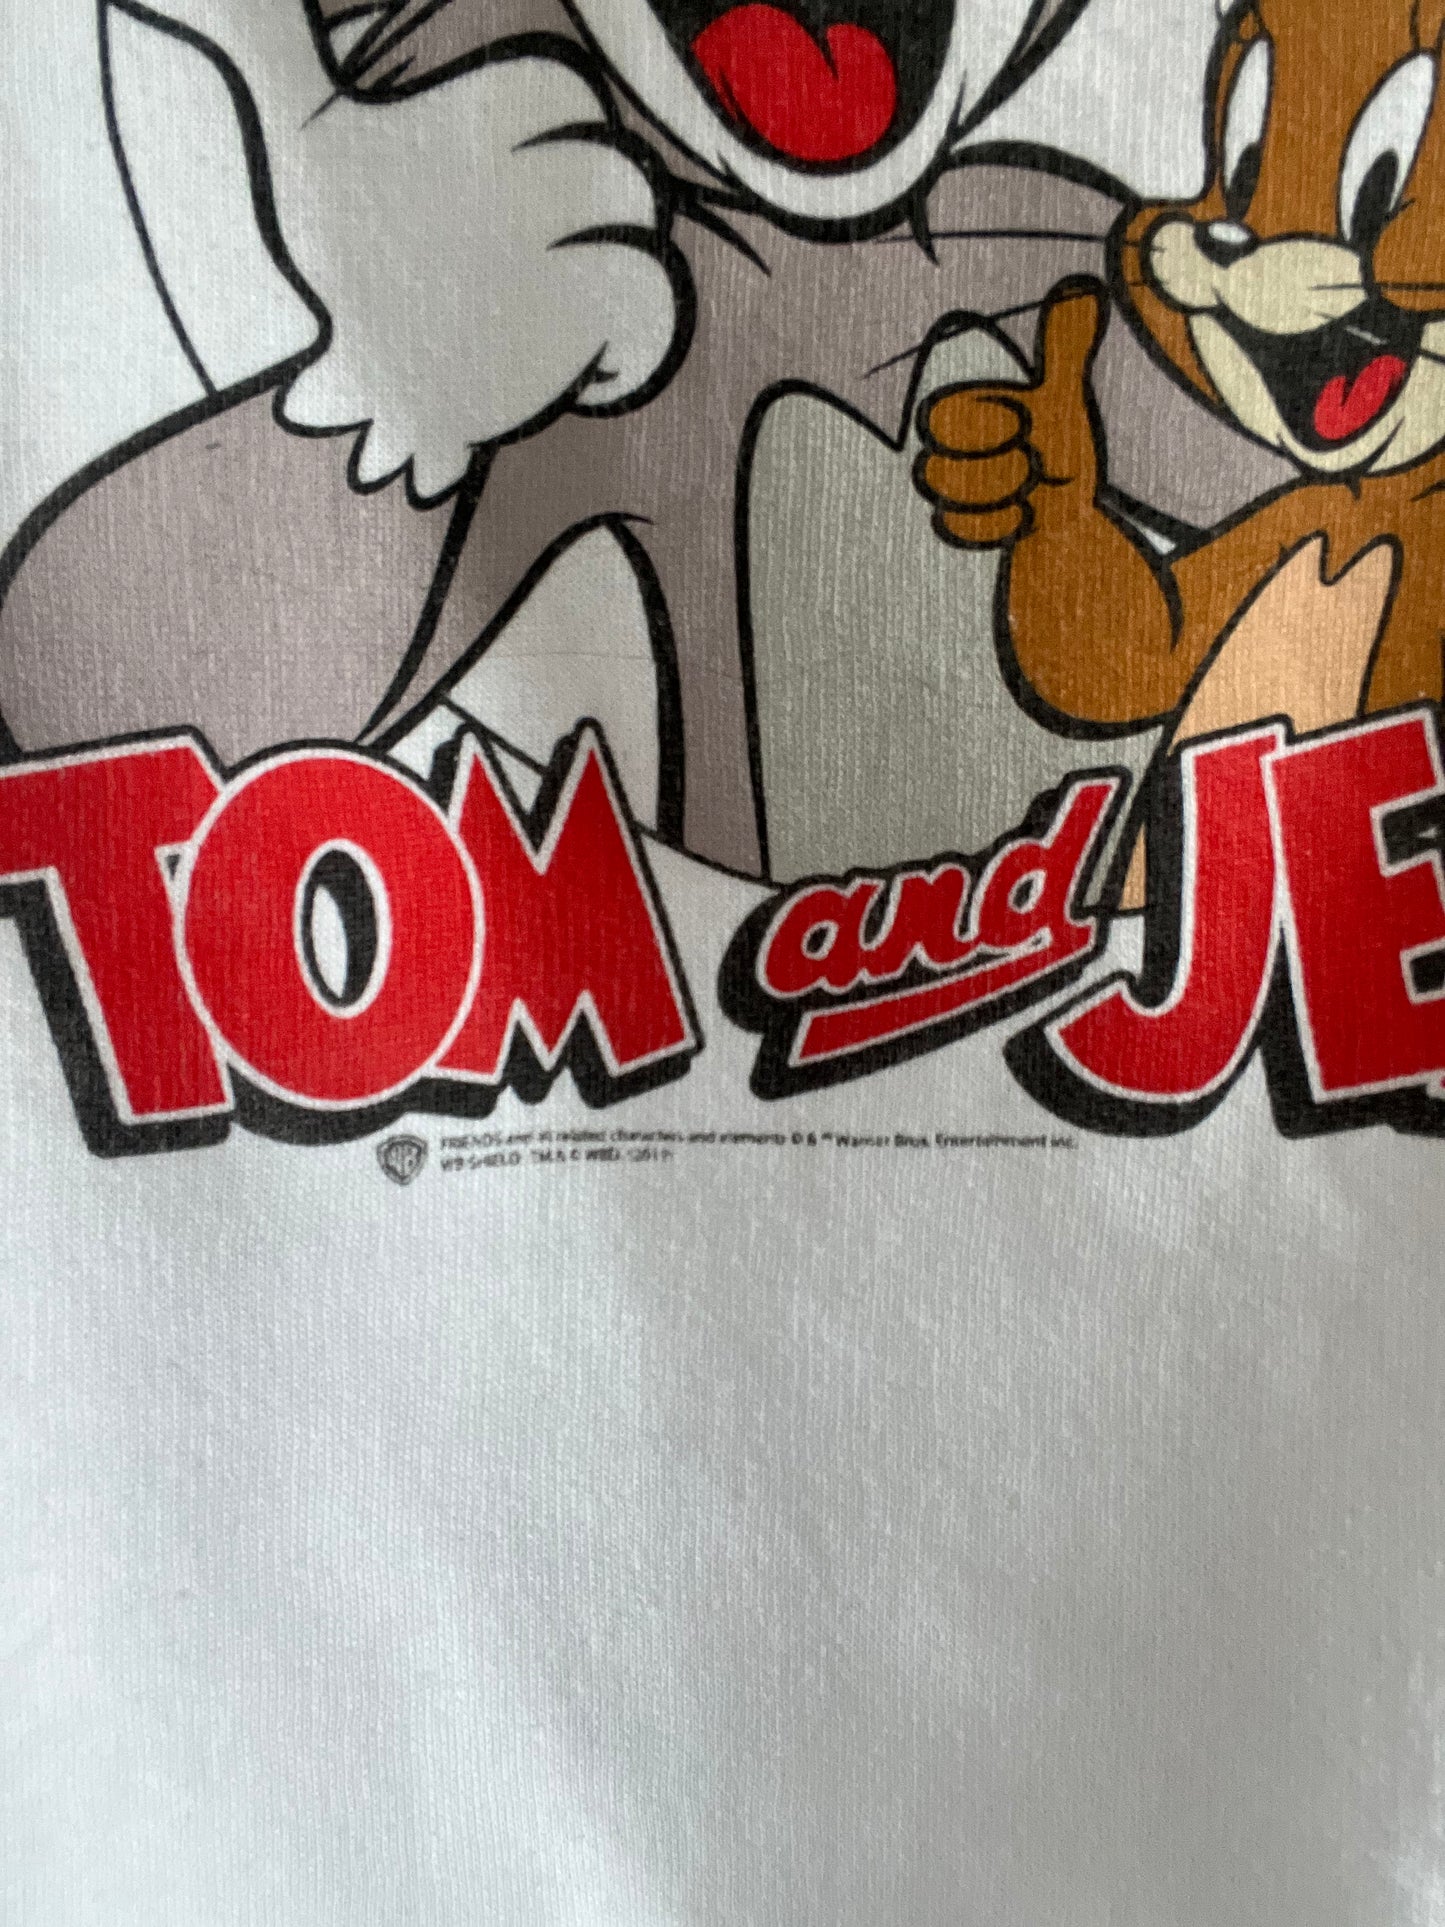 Tom & Jerry Vintage Crewneck - Size M